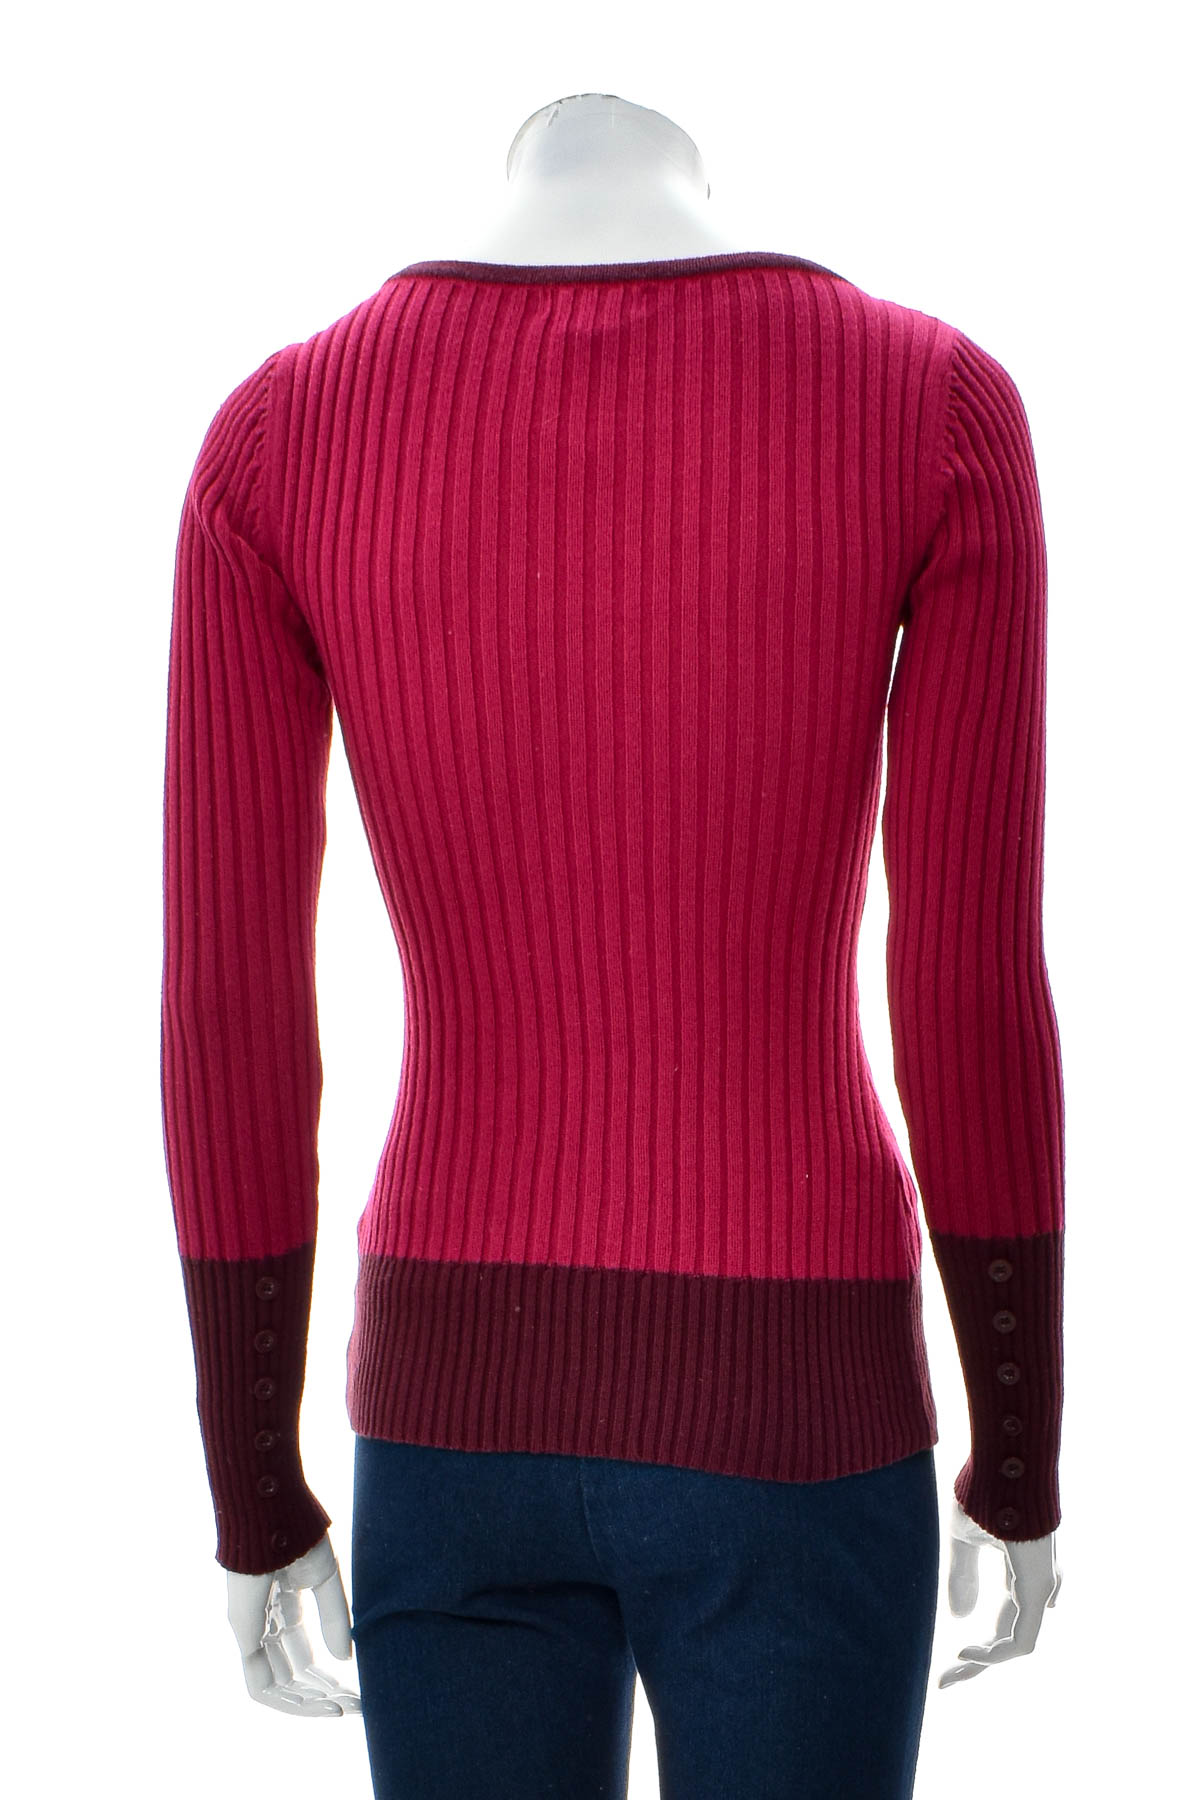 Women's sweater - ARIZONA JEAN COMPANY - 1